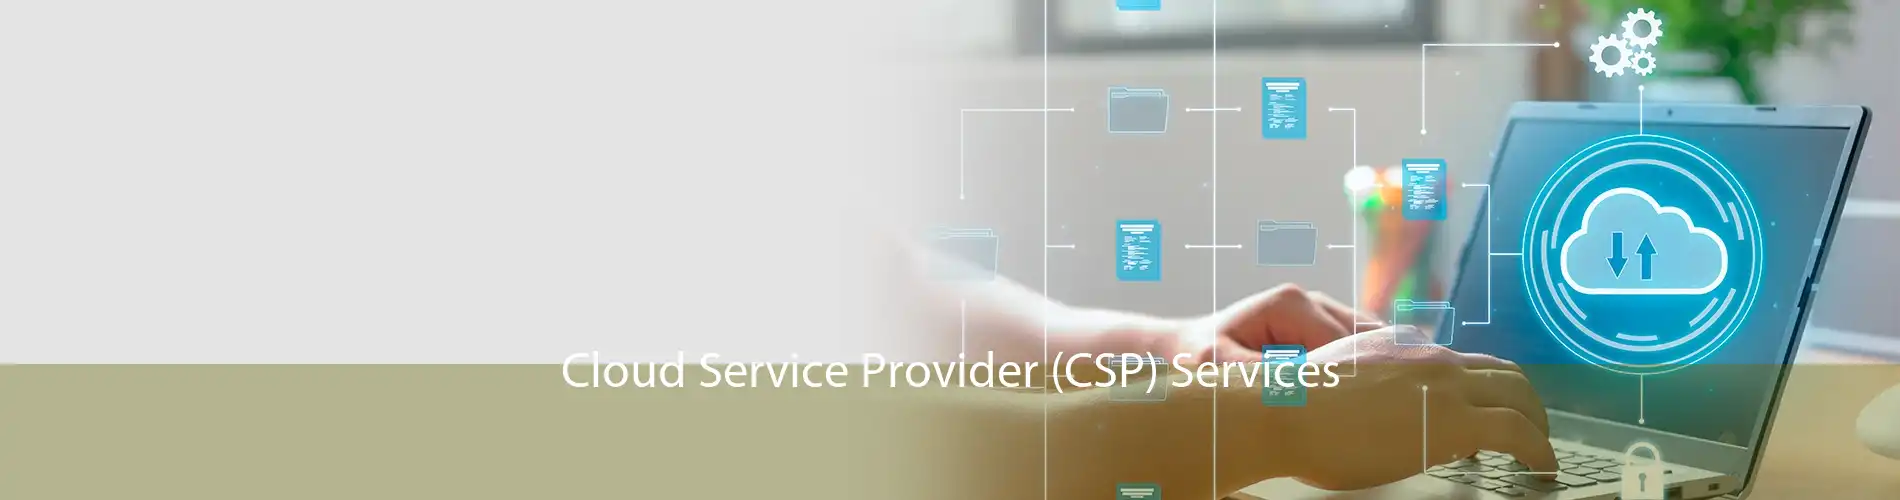 Cloud Service Provider (CSP) Services 